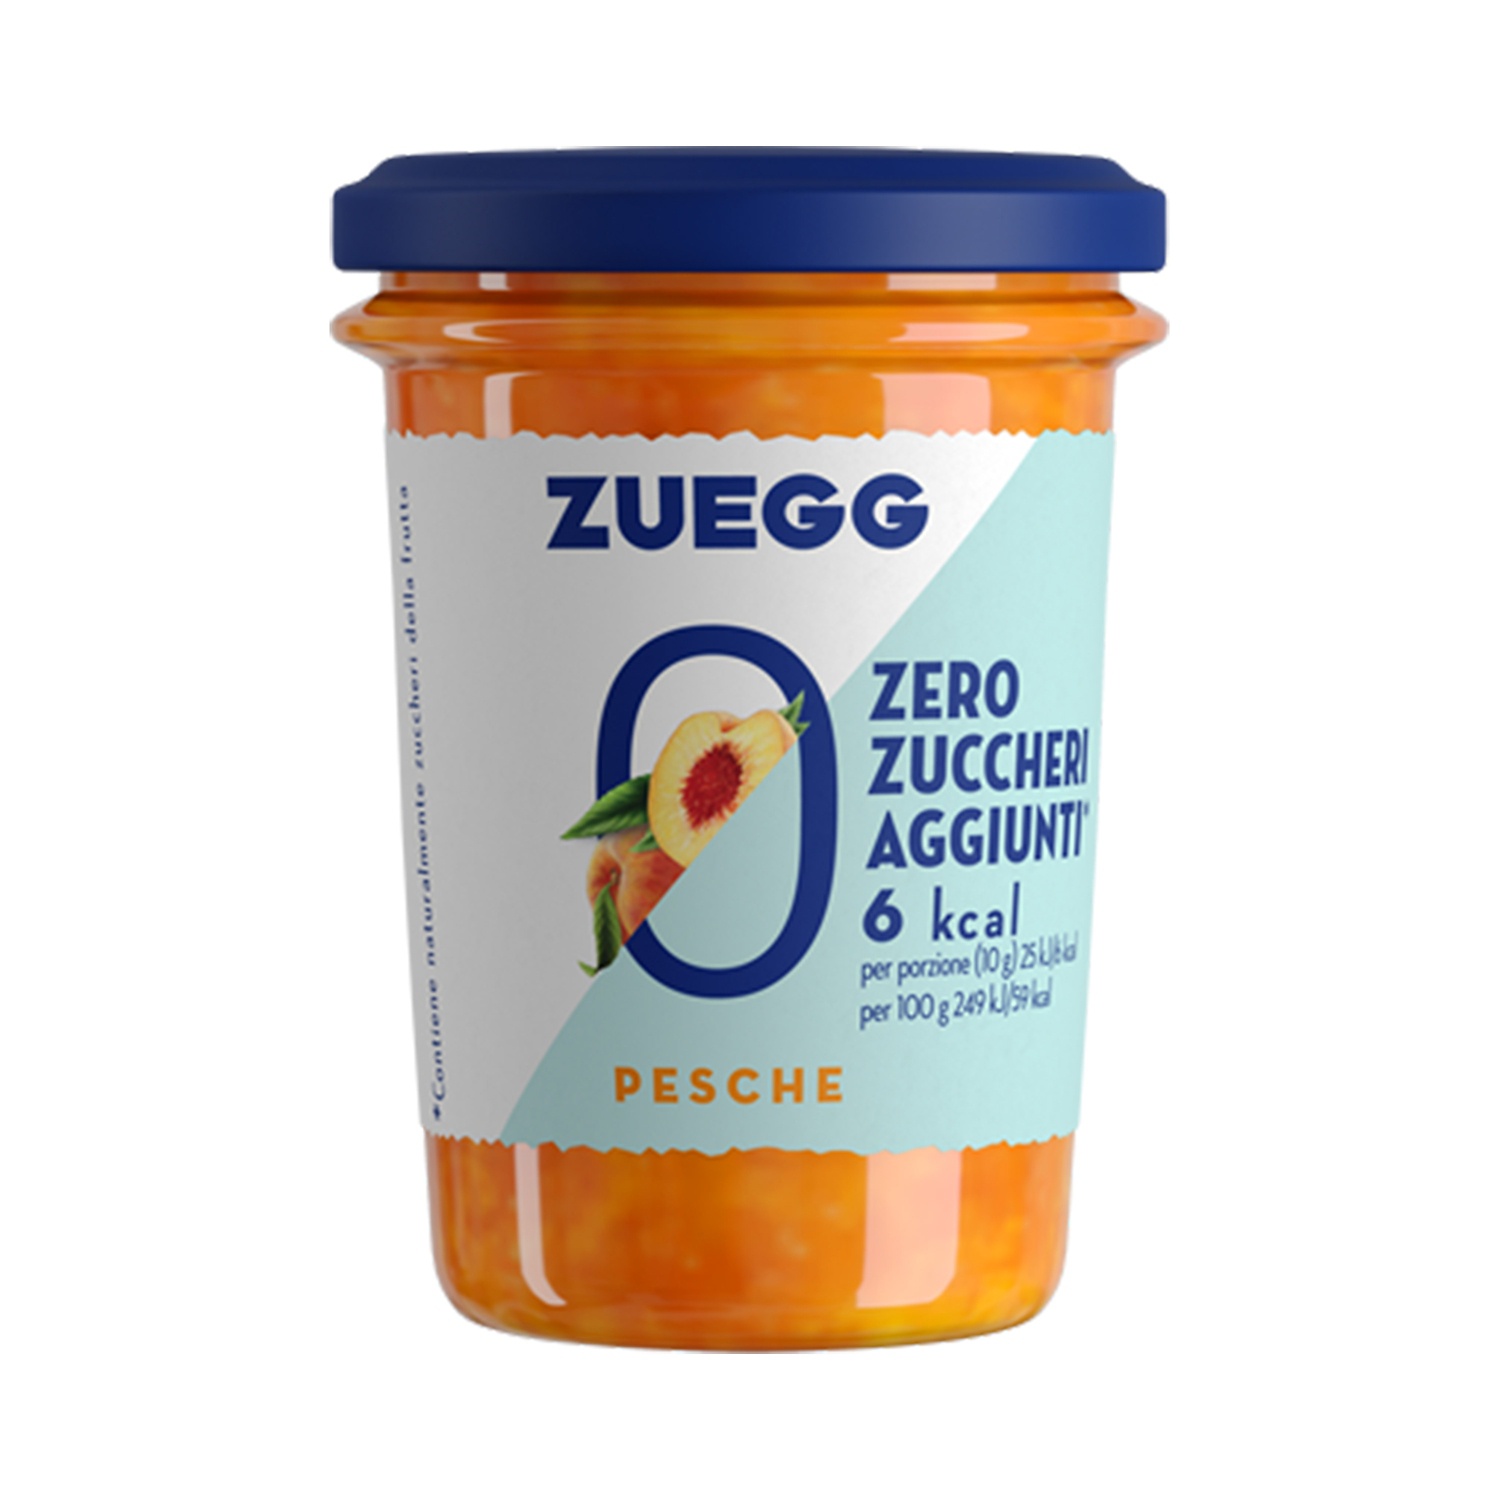 ZUEGG Zero Zuccheri aggiunti alle pesche